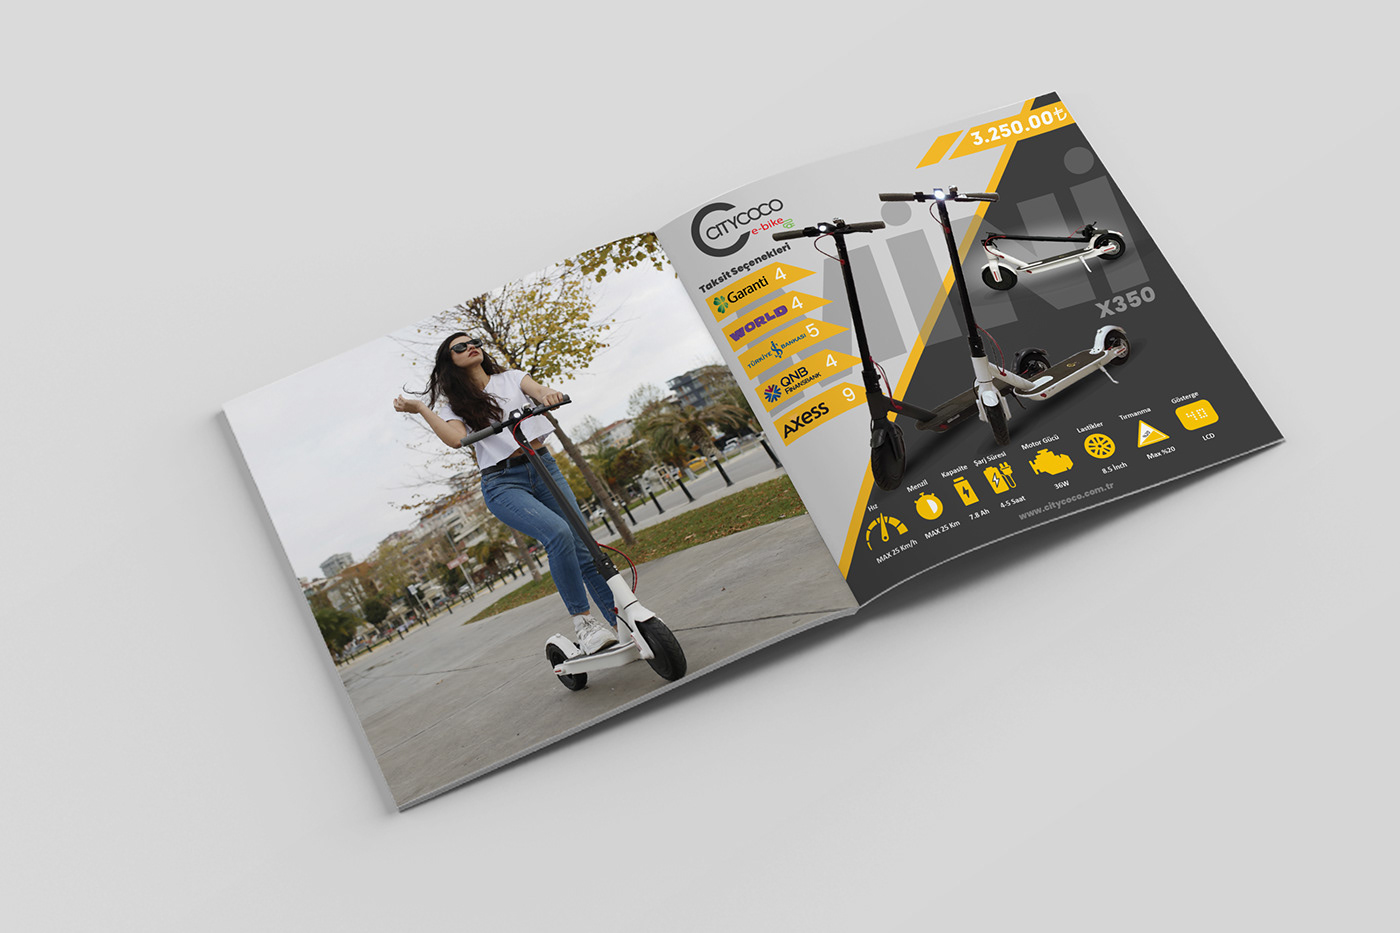 baskı bisiklet catolog citycoco desing elektrikli katolog magazine motorsiklet Scooter